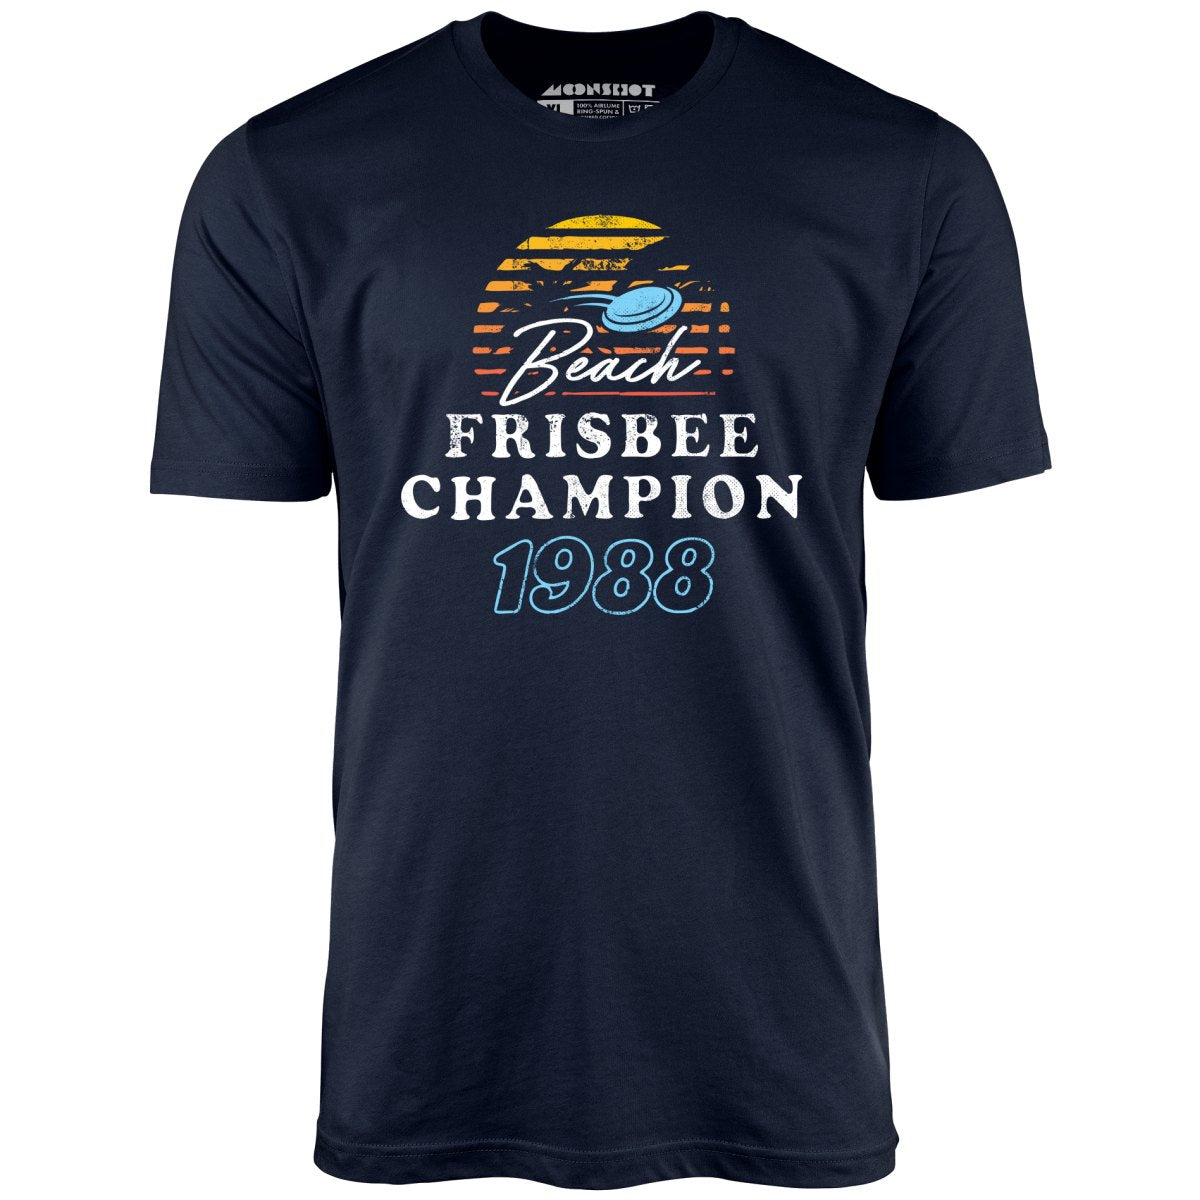 Beach Frisbee Champion 1988 - Unisex T-Shirt